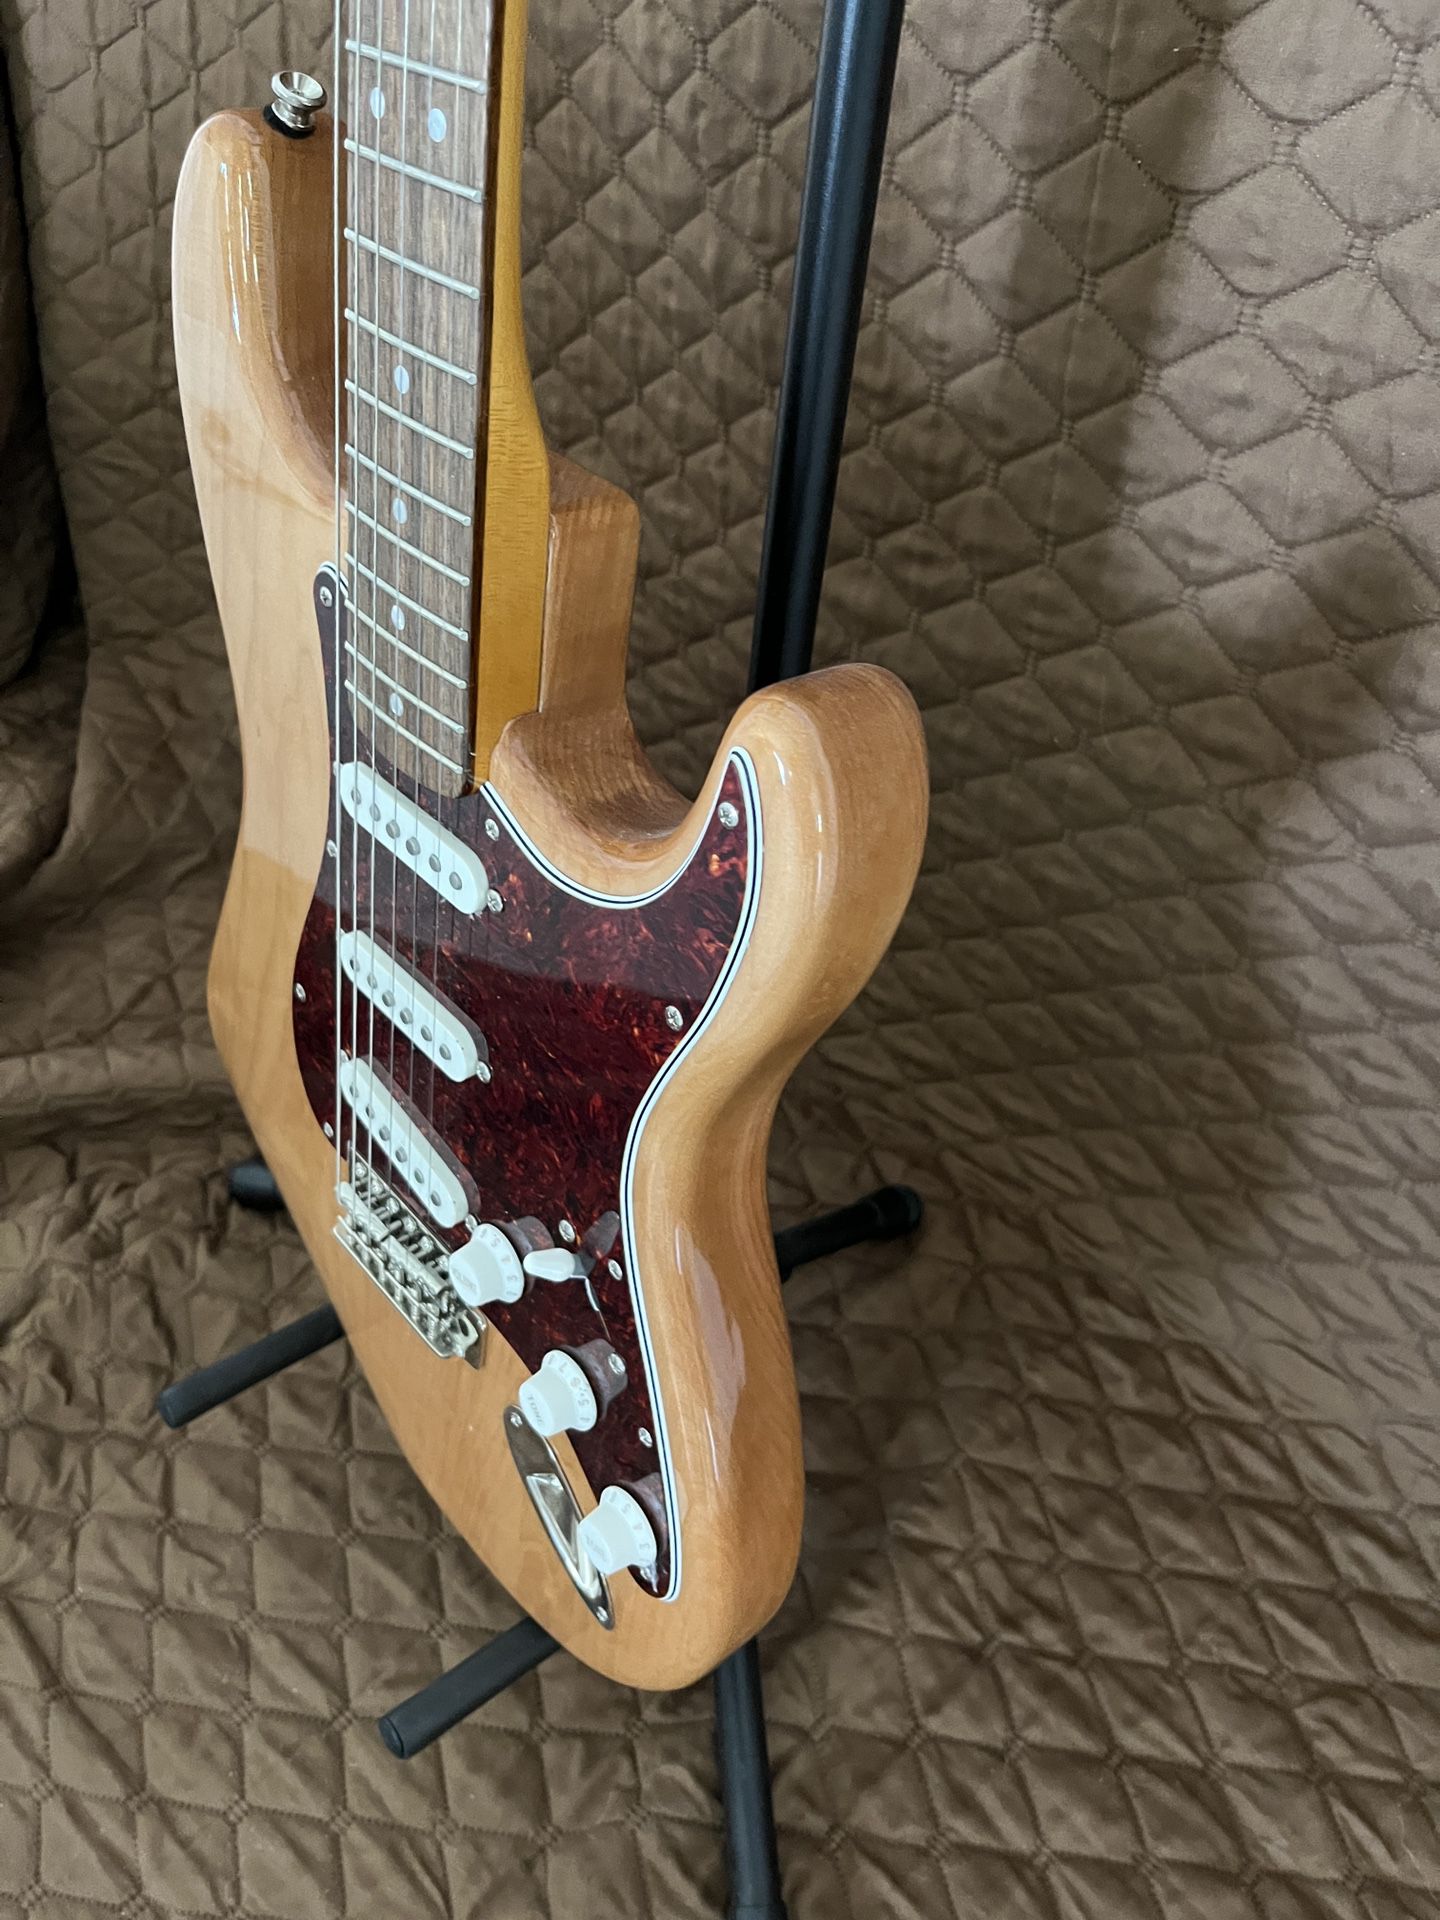 Classic Vibe '70s Stratocaster Fender Squire